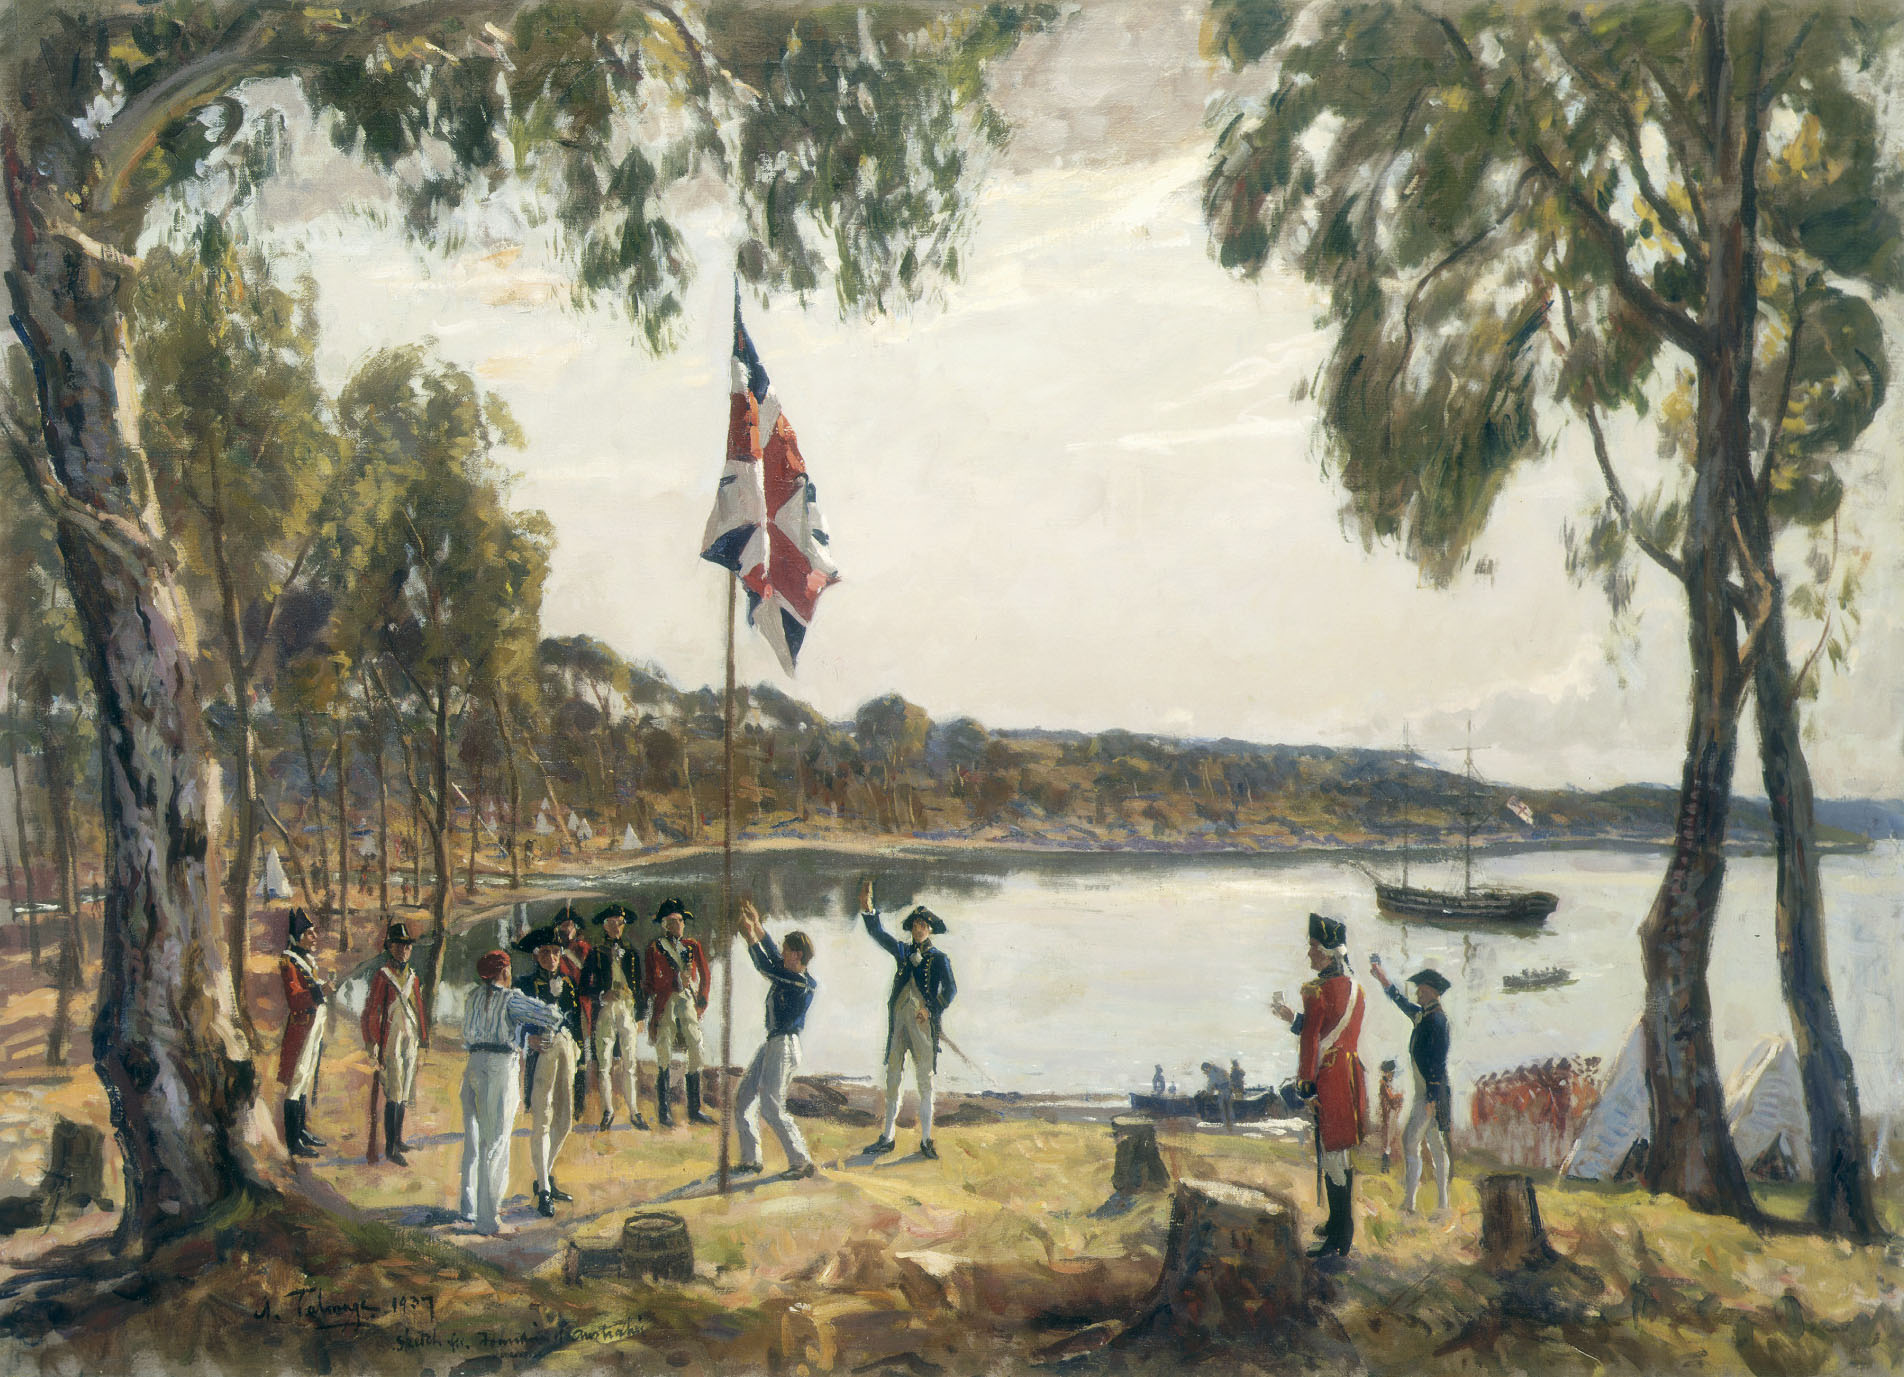 The Founding of Australia. By Capt. Arthur Phillip R.N. Sydney Cove, Jan. 26th 1788, by Algernon Talmage, 1937.